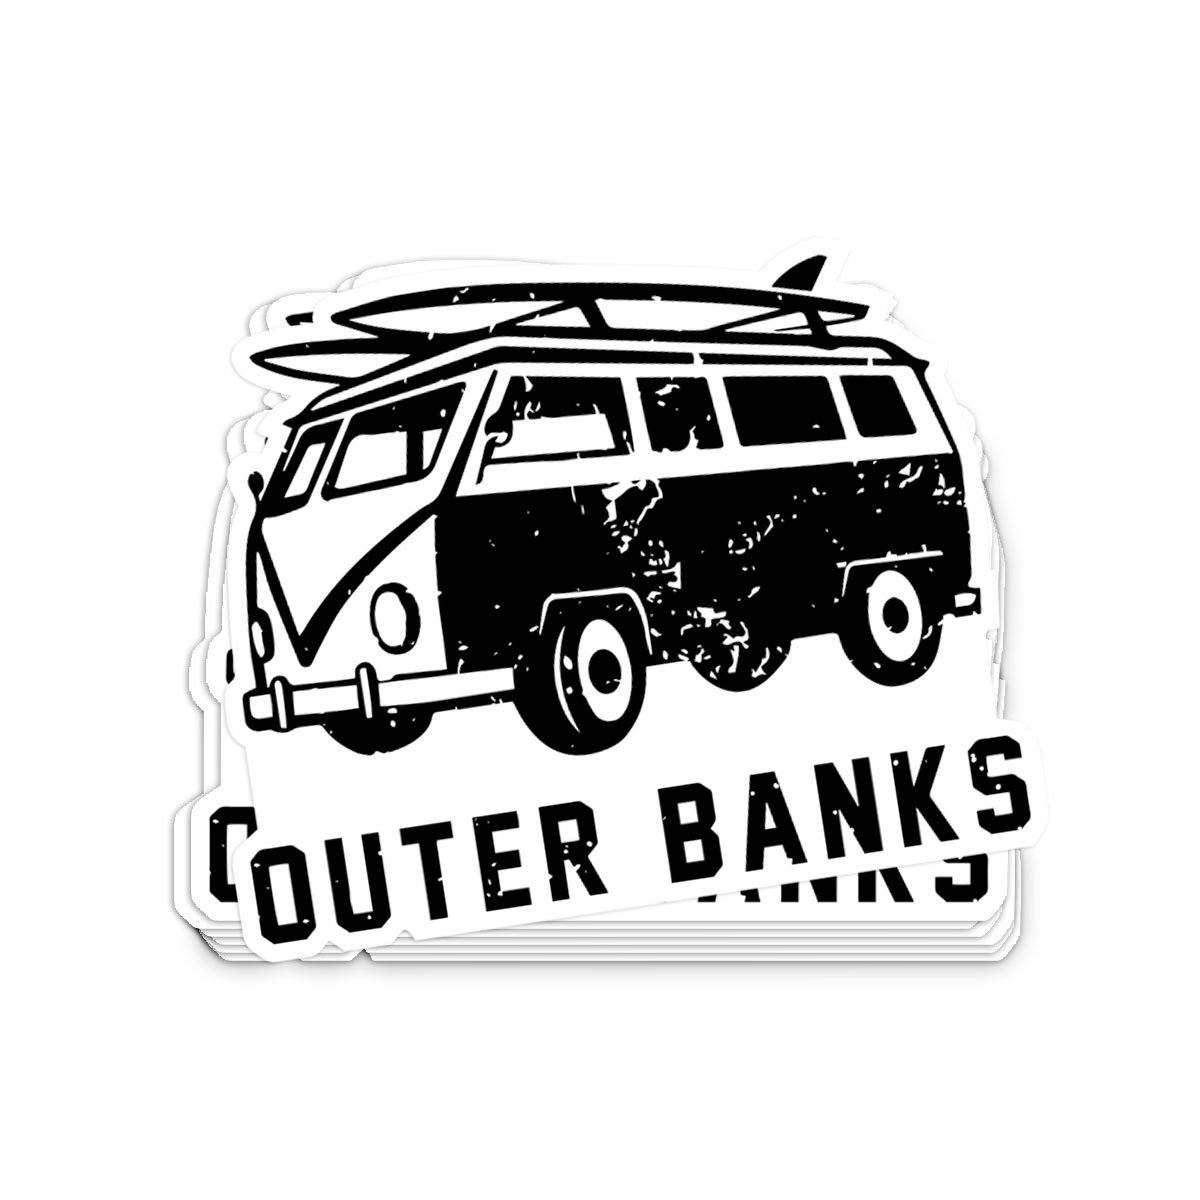 Outer Banks Van Sticker